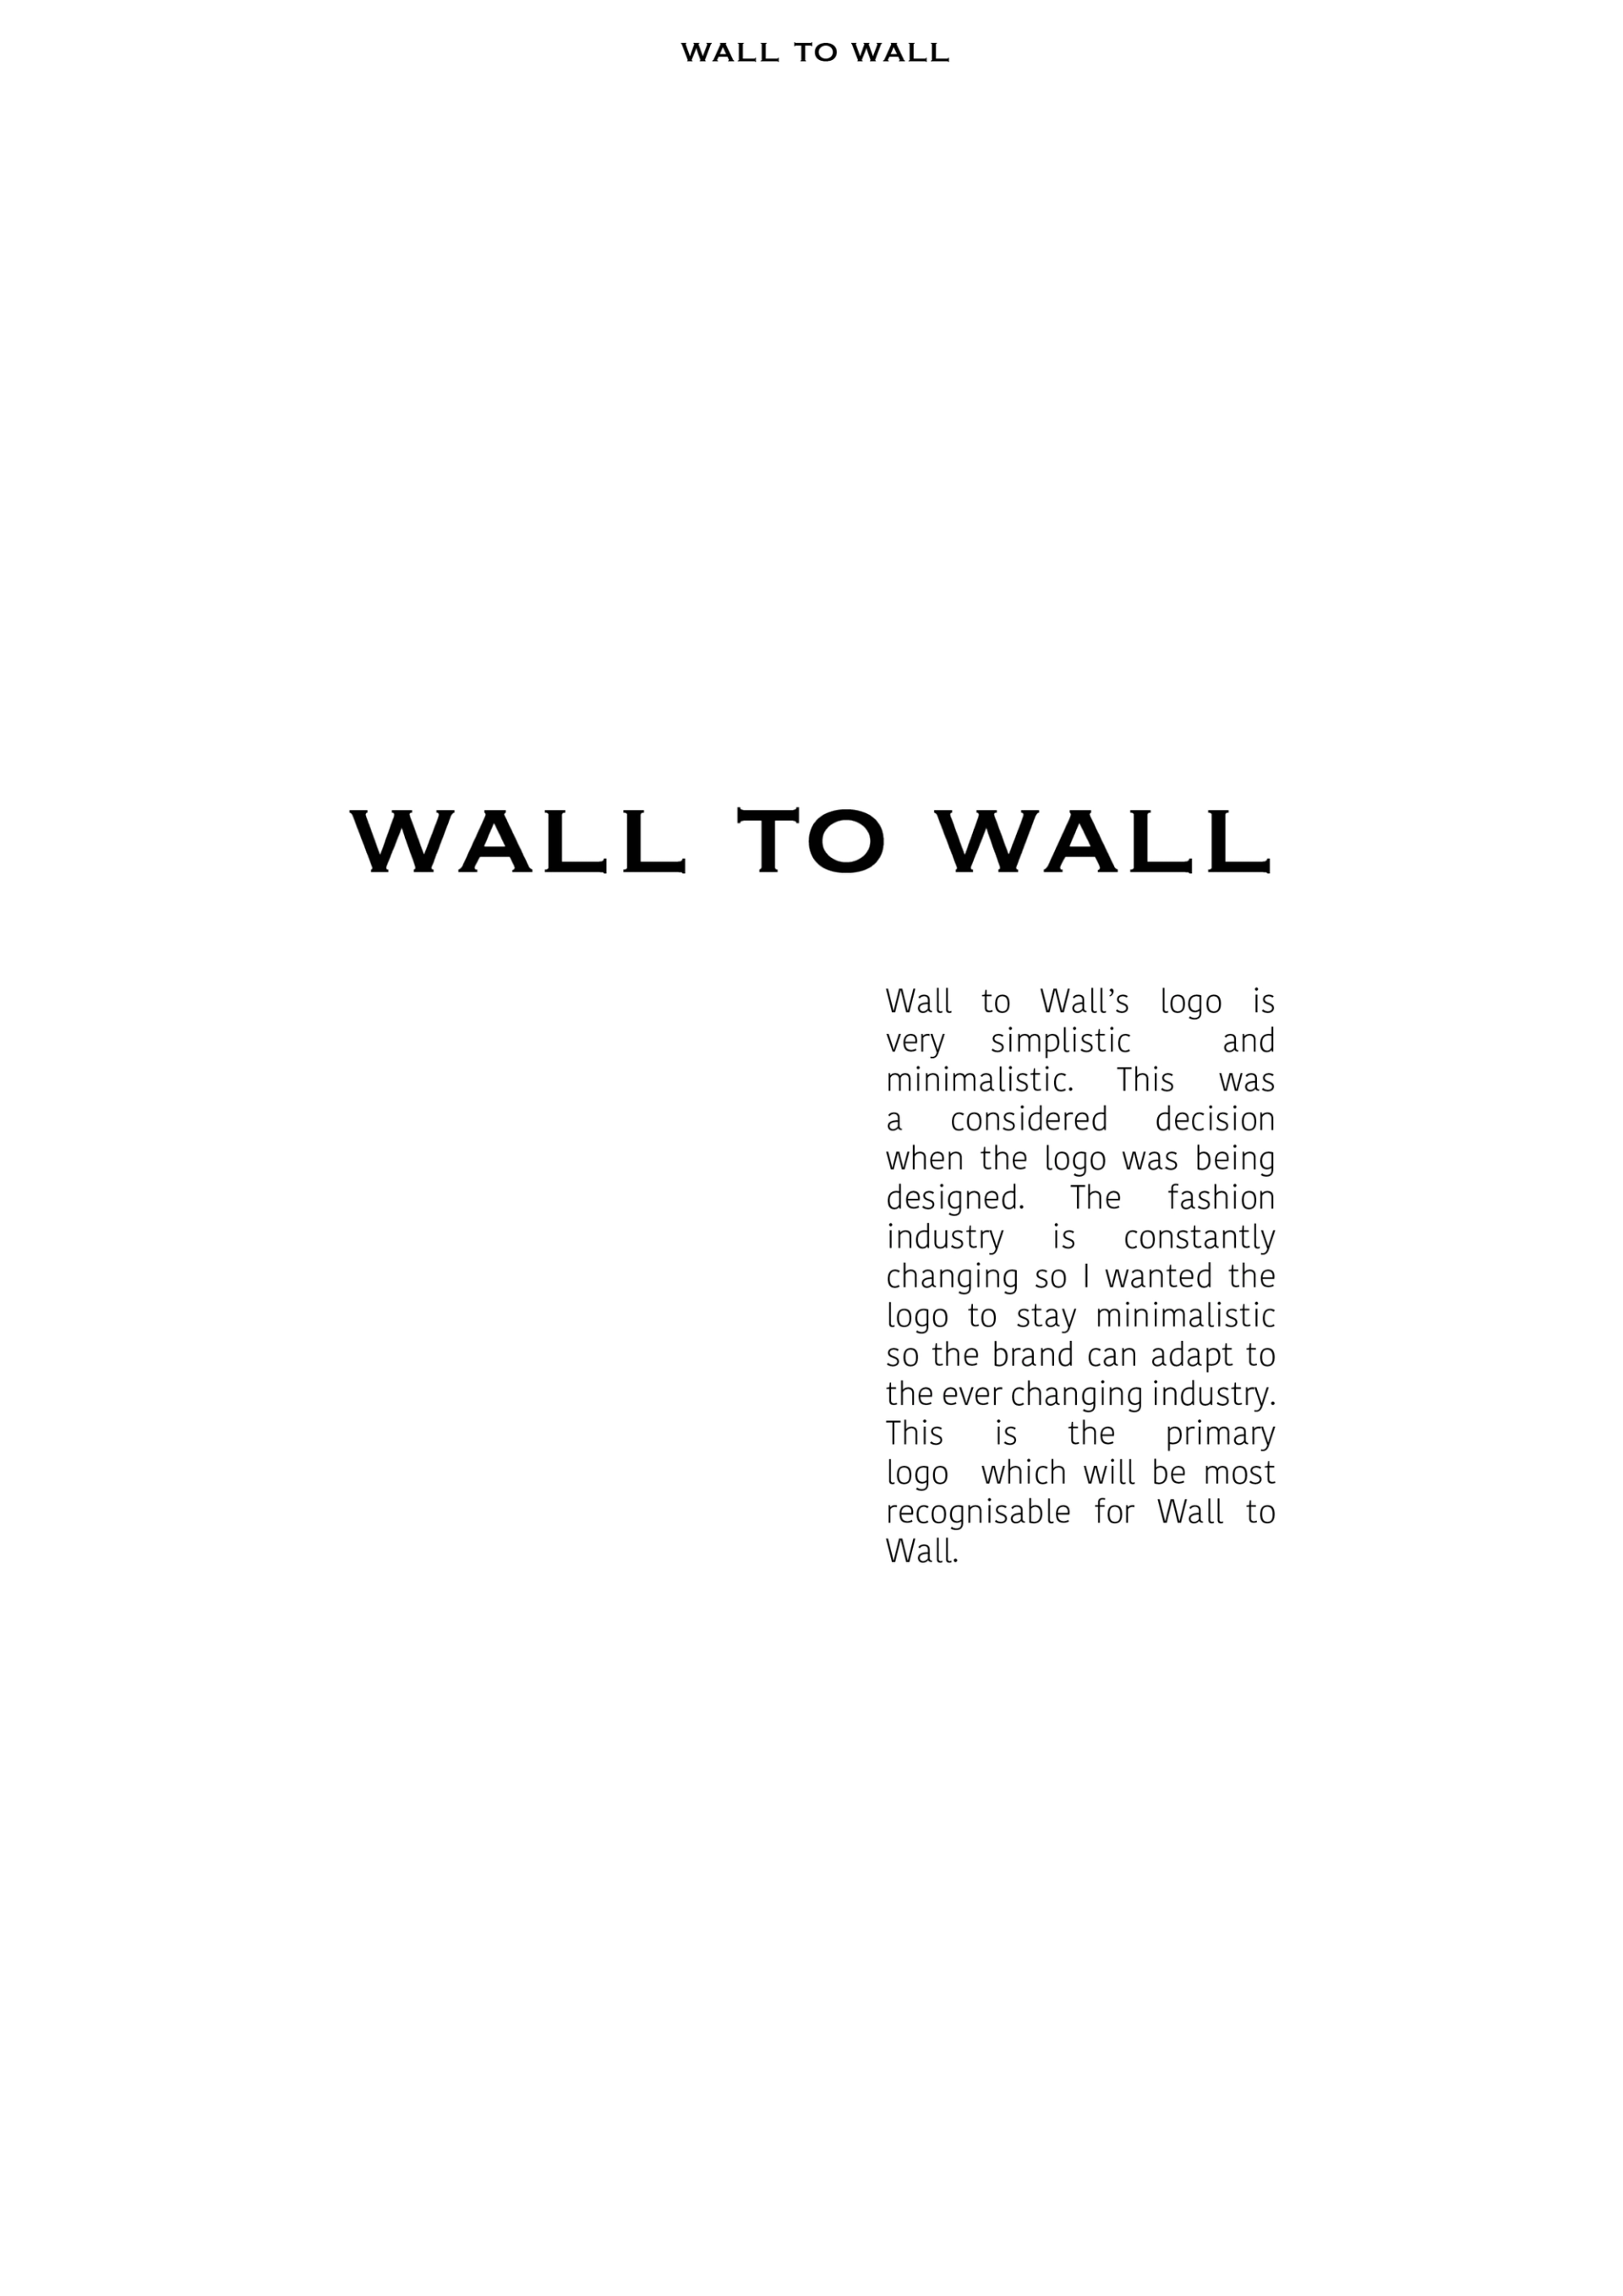 Wall to Wall Logo